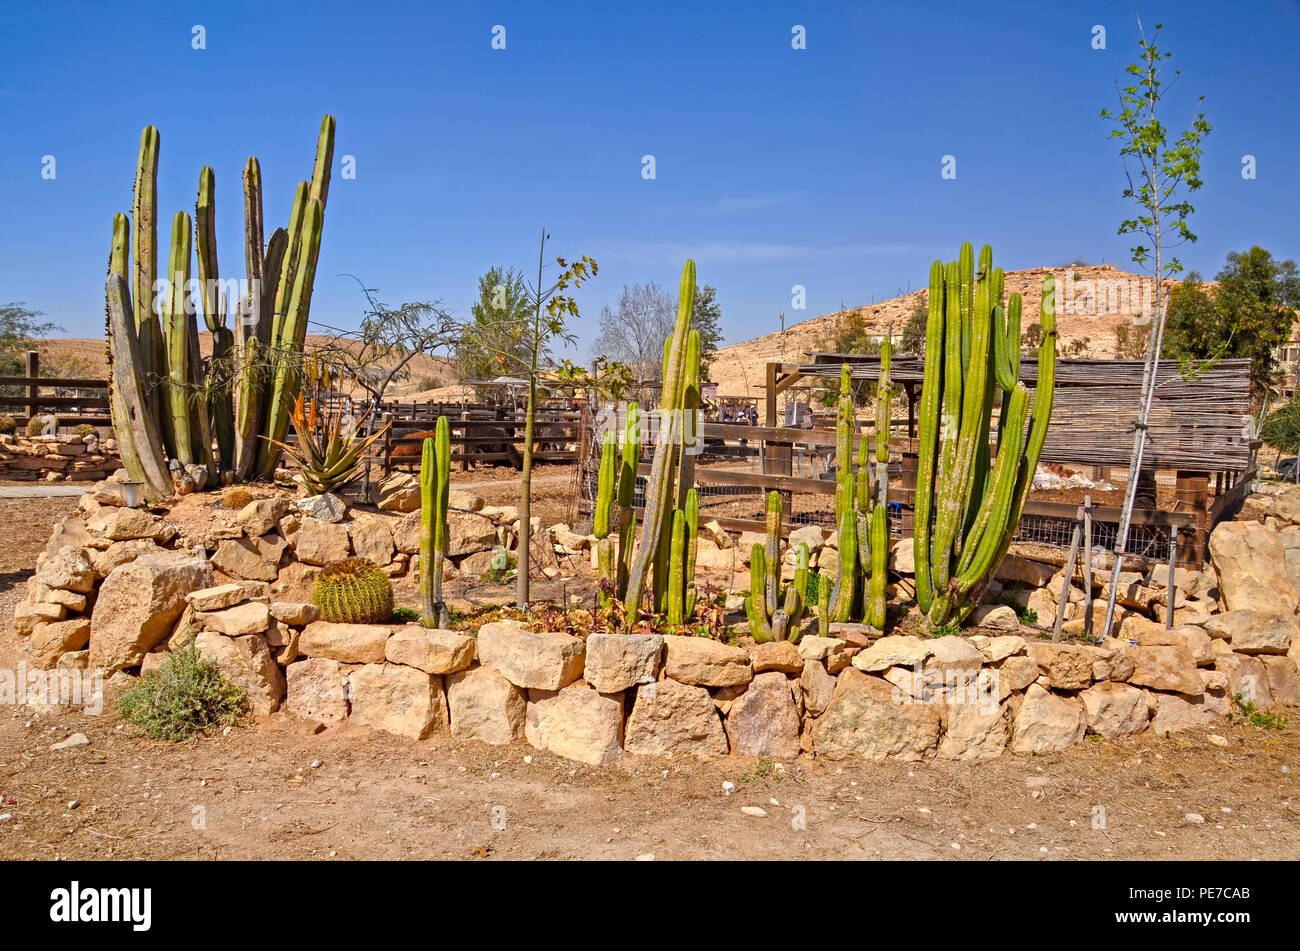 Cacti garden in the desert Stock Photo